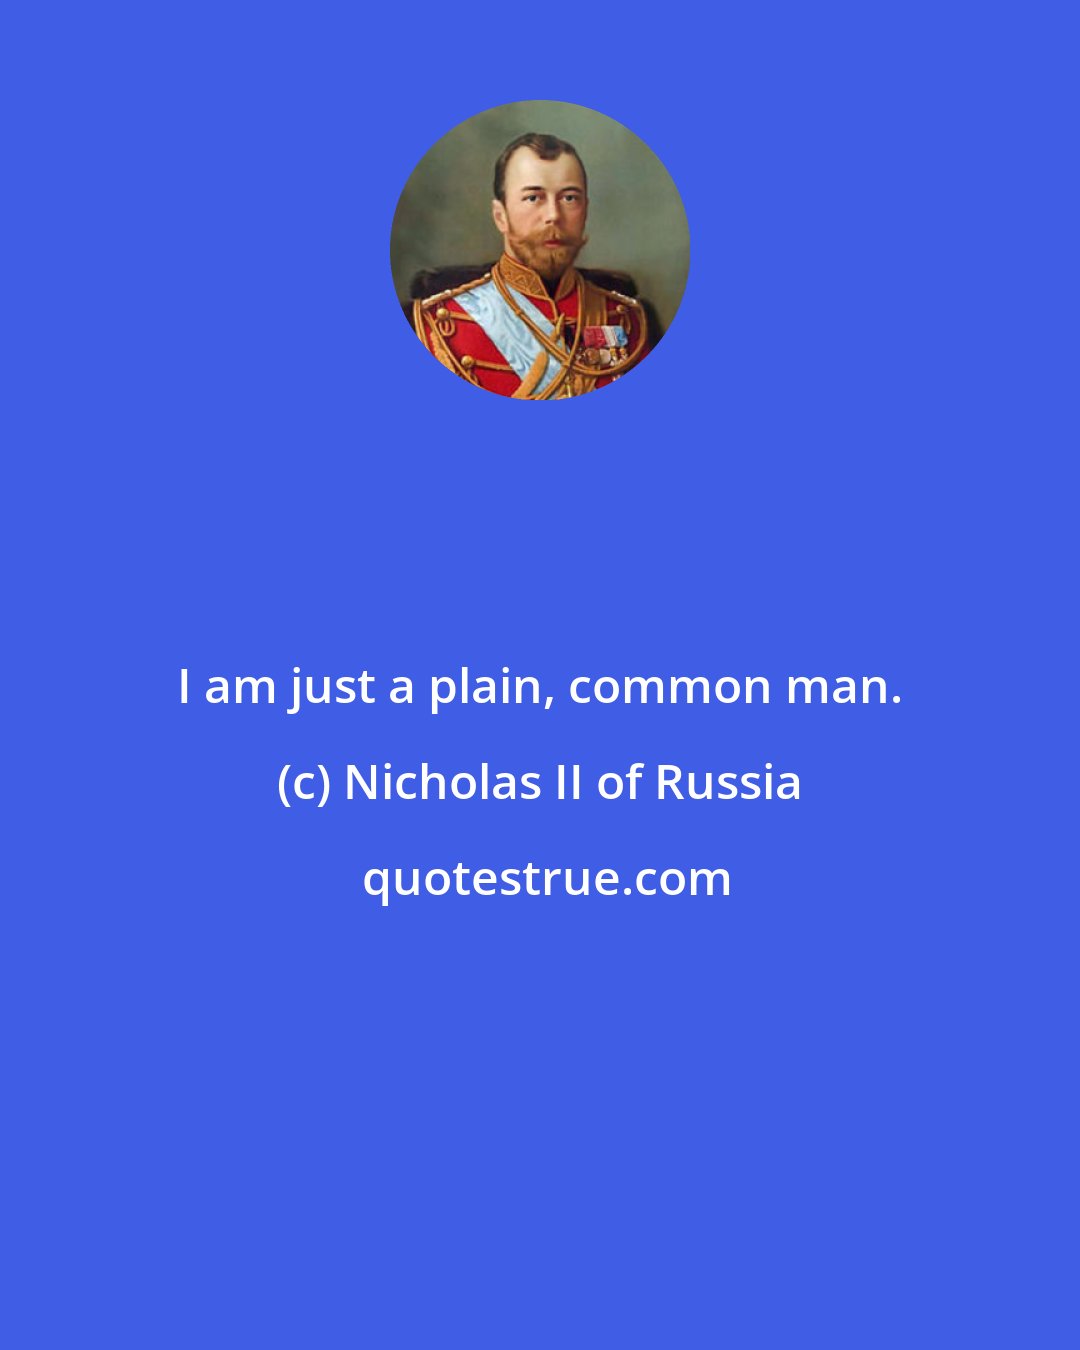 Nicholas II of Russia: I am just a plain, common man.